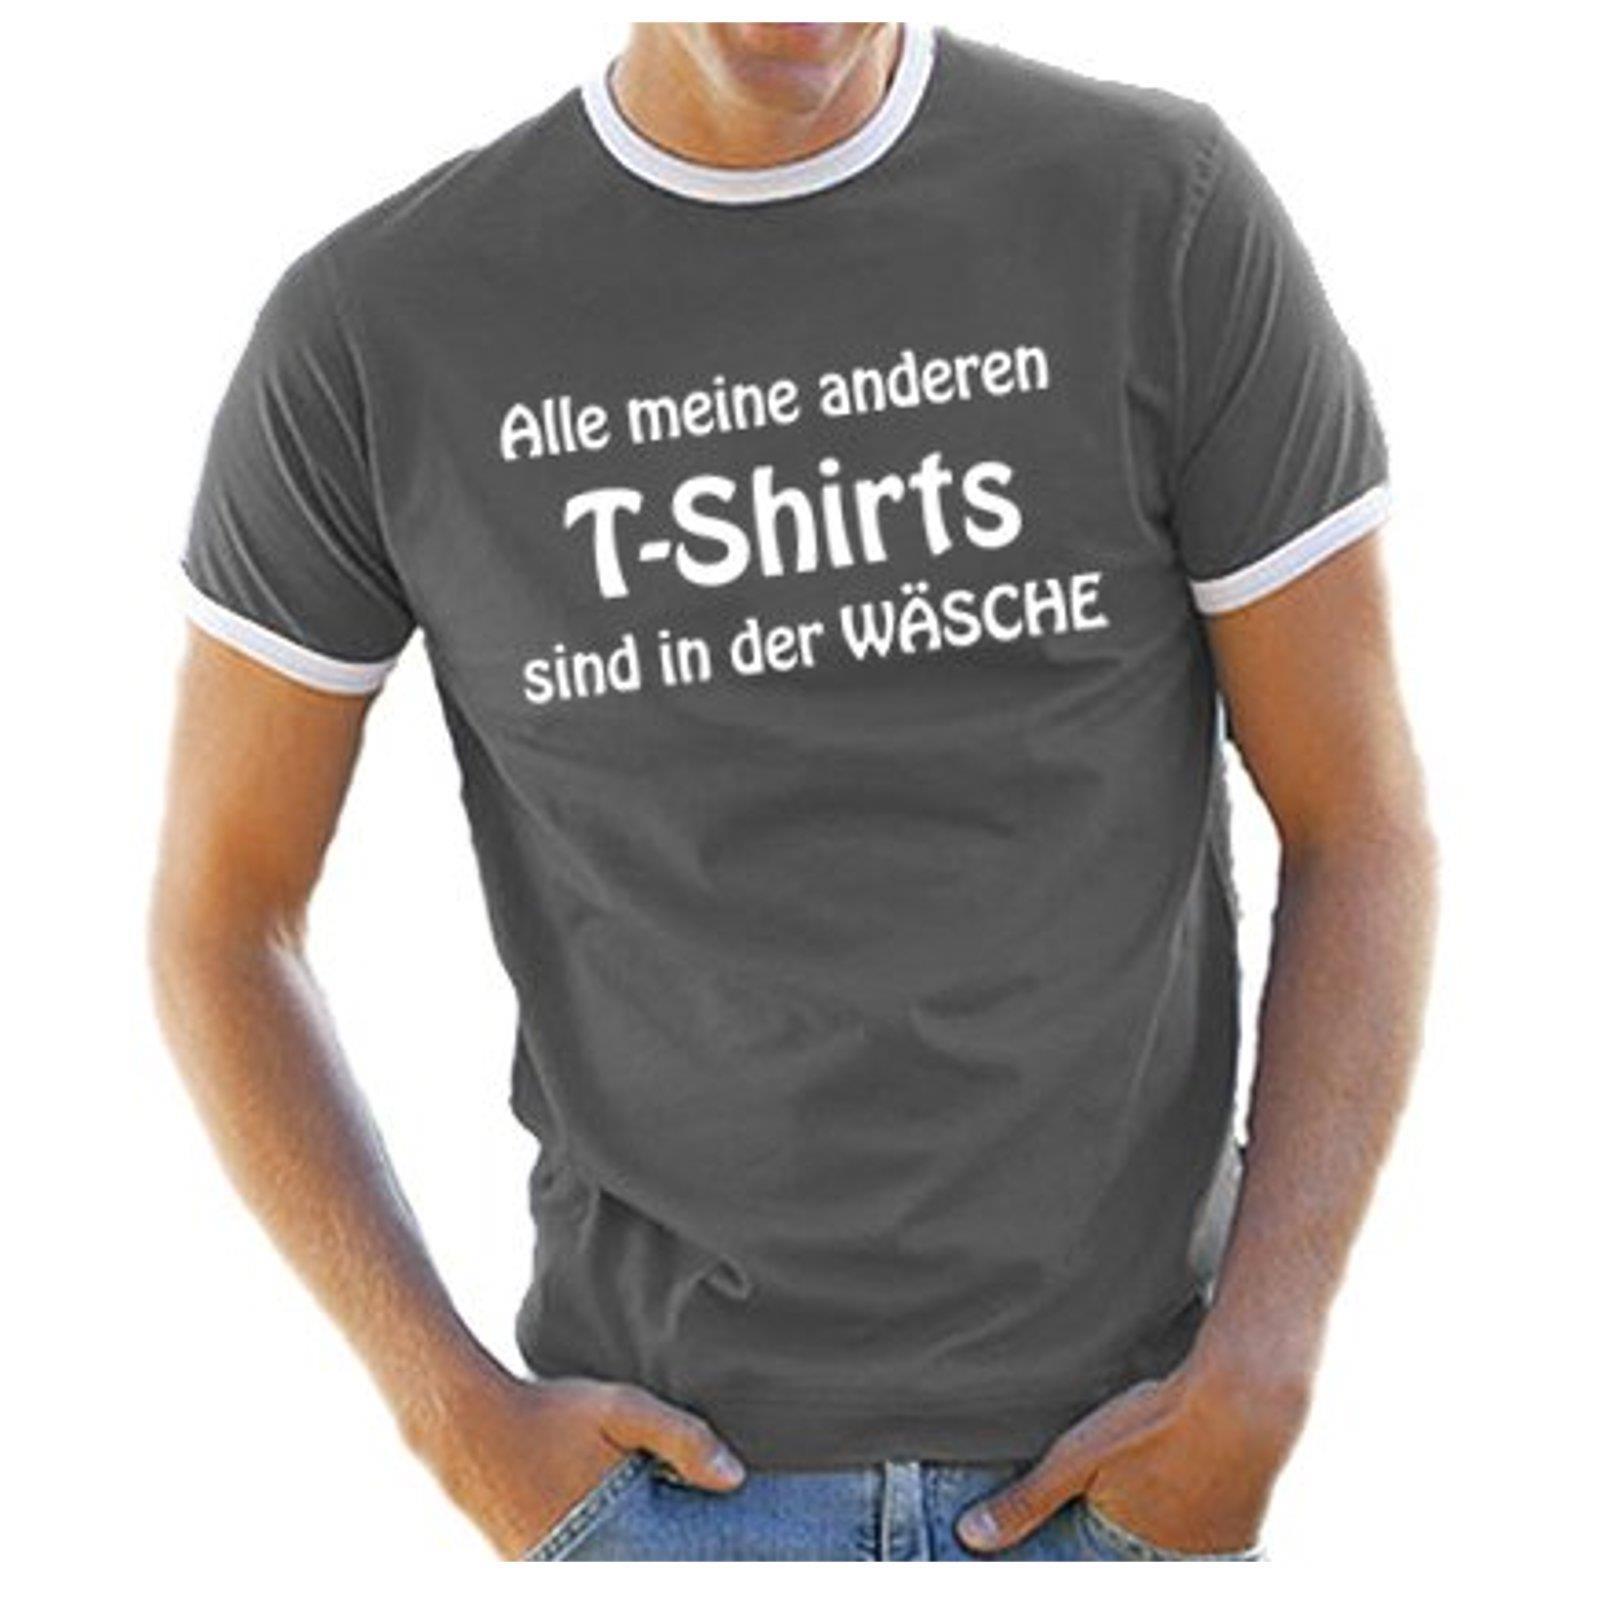 49++ Lustige tshirt sprueche fuer maenner ideas in 2021 